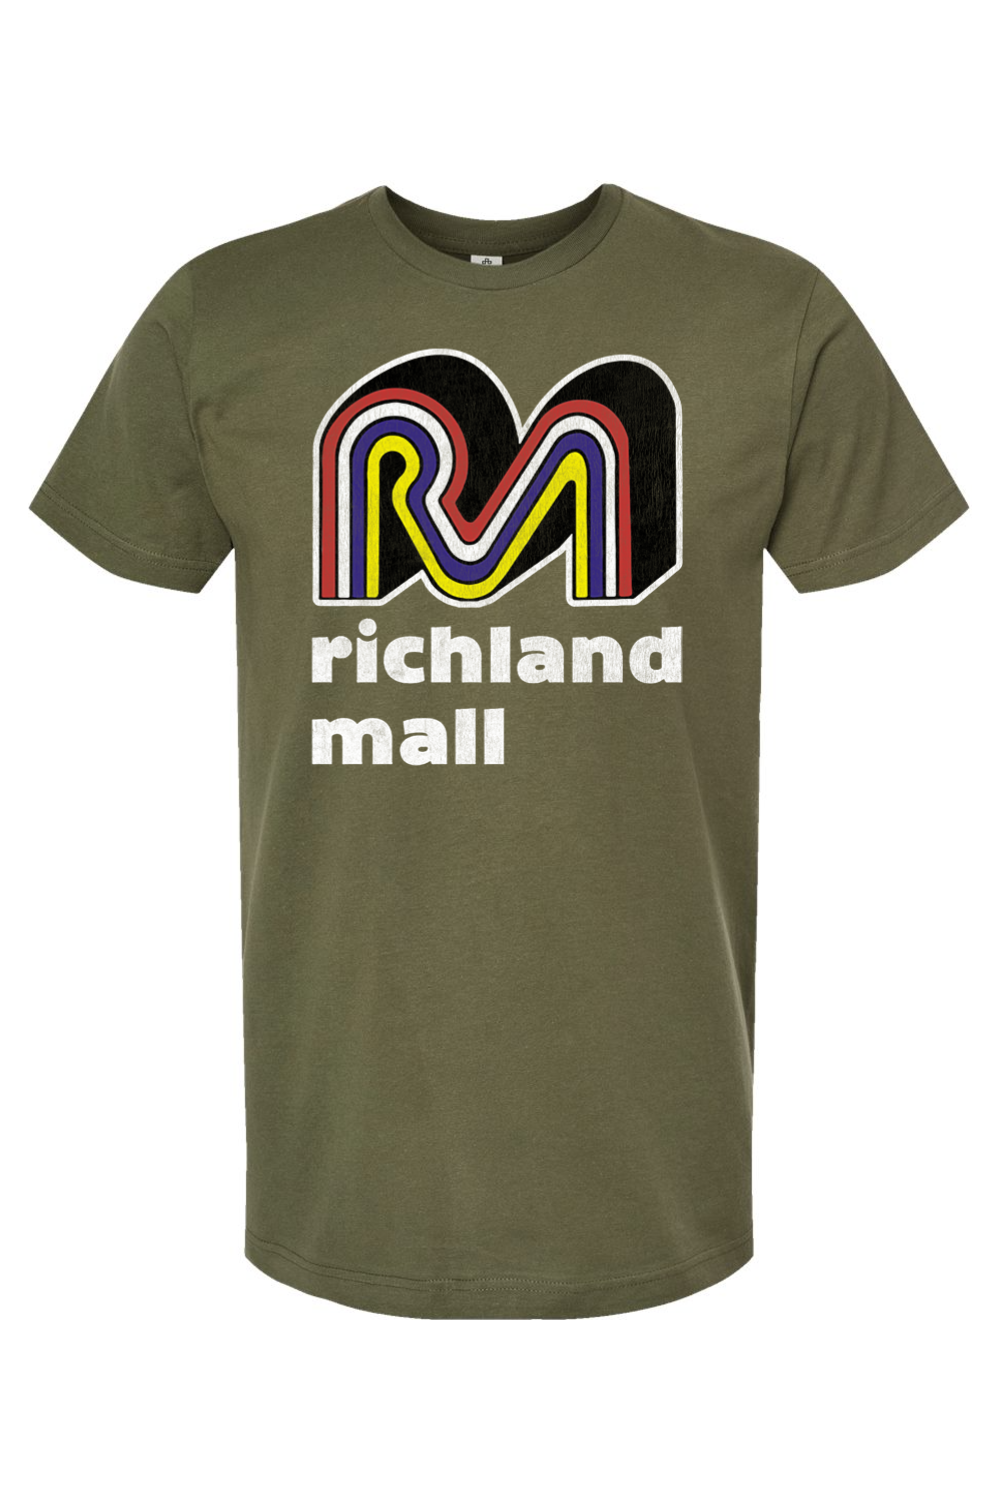 Richland Mall - Yinzylvania